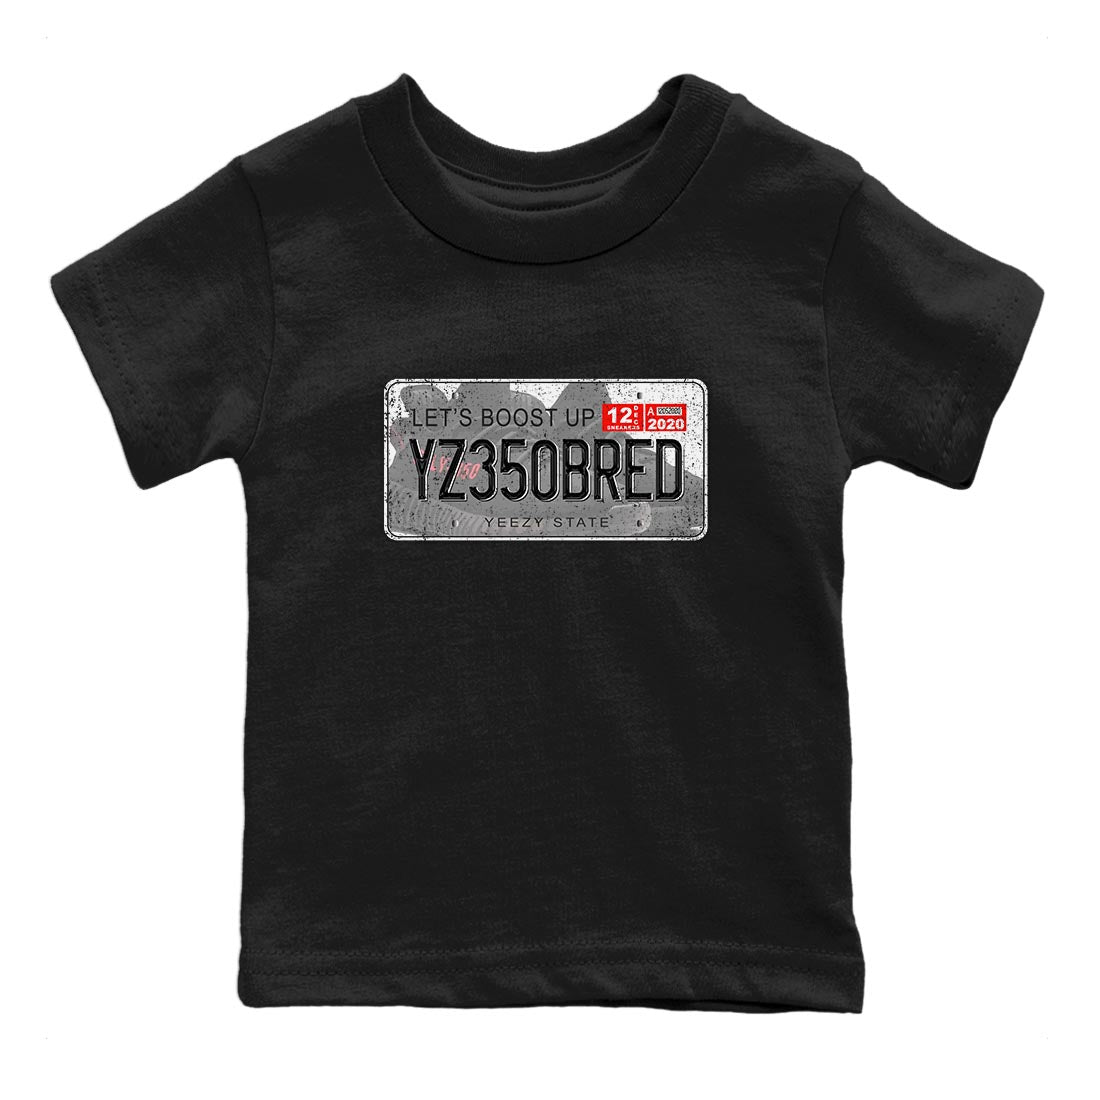 Yeezy 350 Bred shirt to match jordans Yeezy Plate Streetwear Sneaker Shirt Yeezy Boost 350 V2 Bred Drip Gear Zone Sneaker Matching Clothing Baby Toddler Black 2 T-Shirt